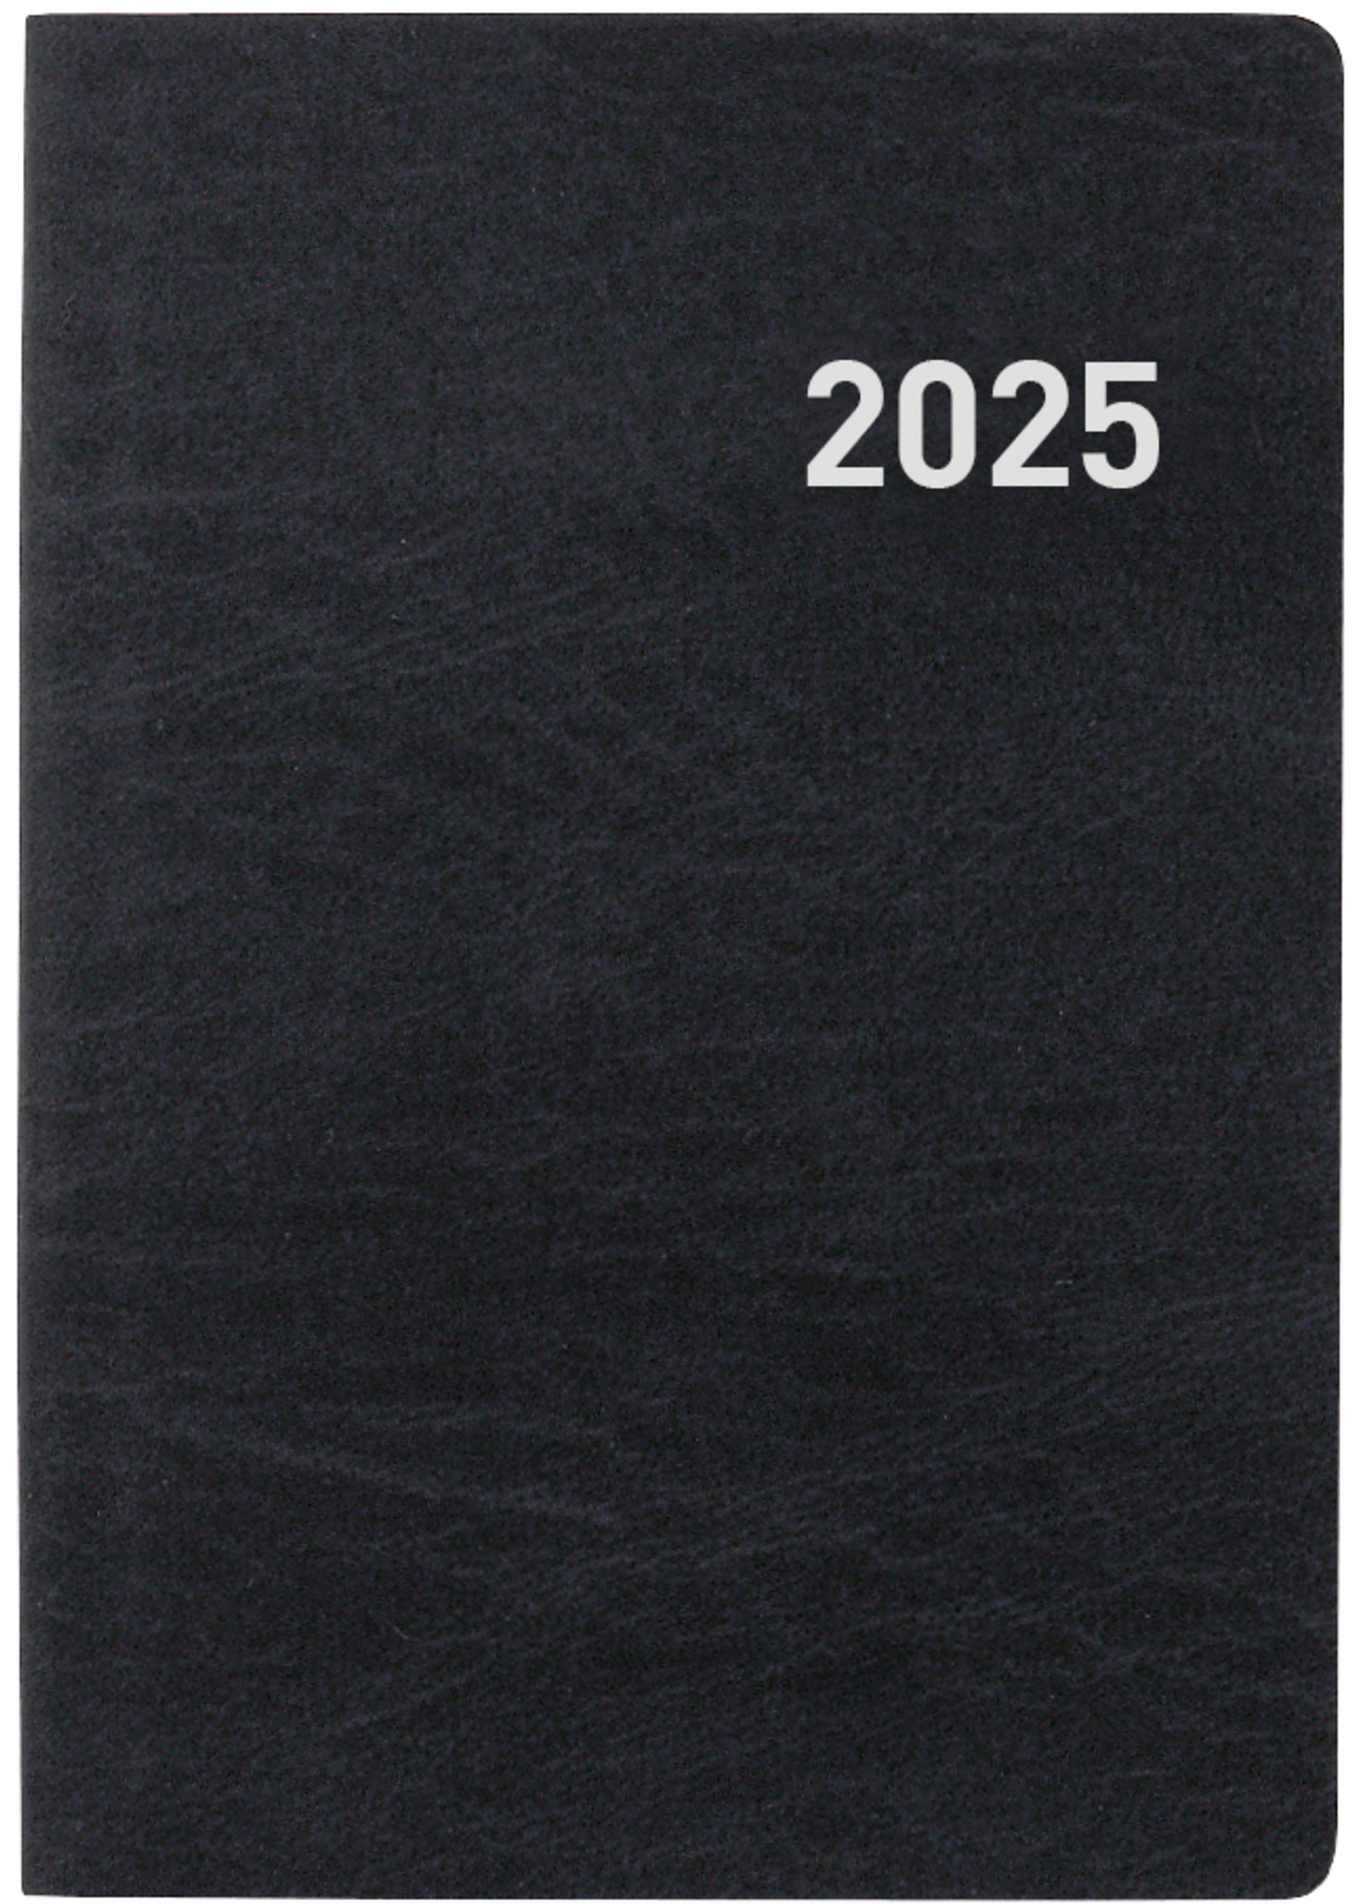 BIELLA Agenda Mittelformat 2025 822301020025 1S/2P noir ML 7.6x11cm